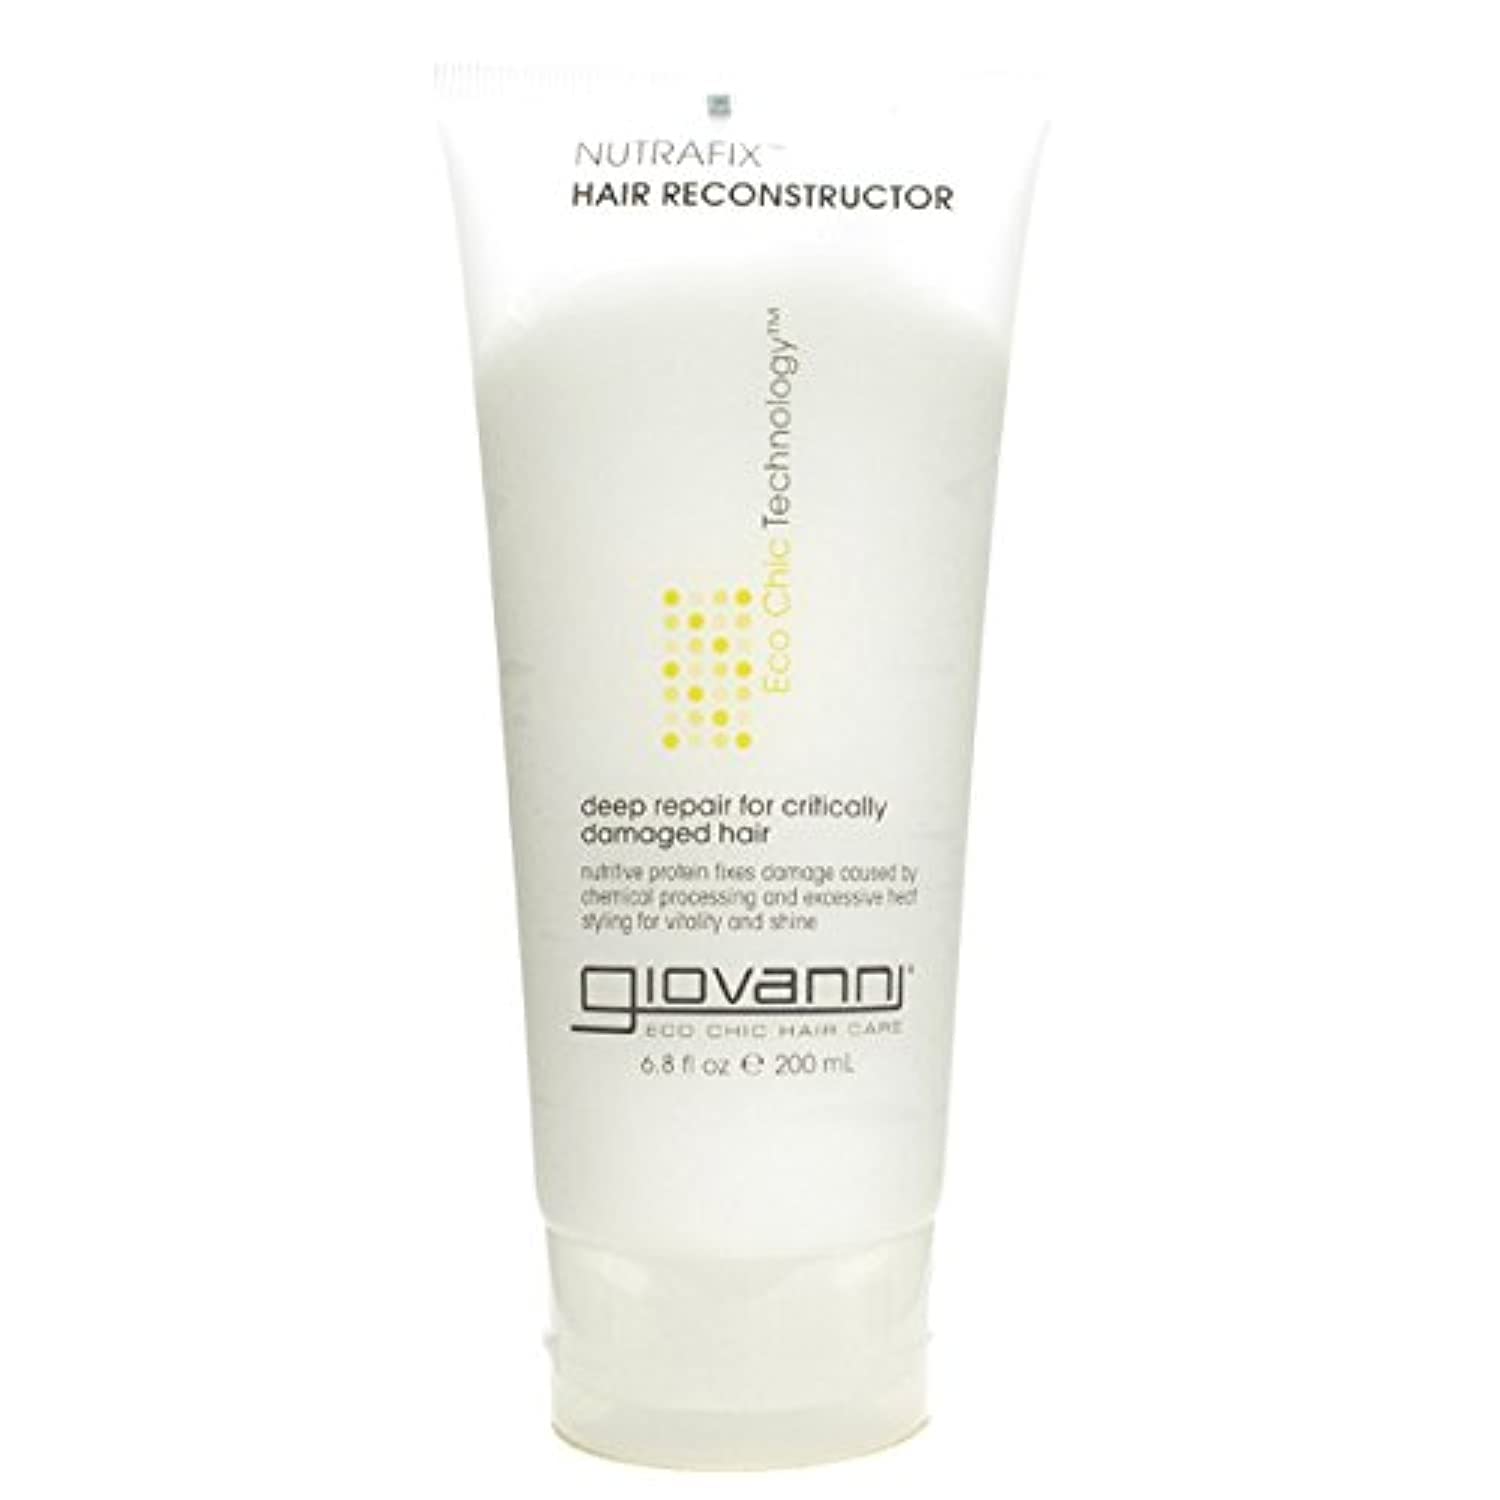 Giovanni Nutrafix Hair Reconstructor 6.8 fl oz Liquid